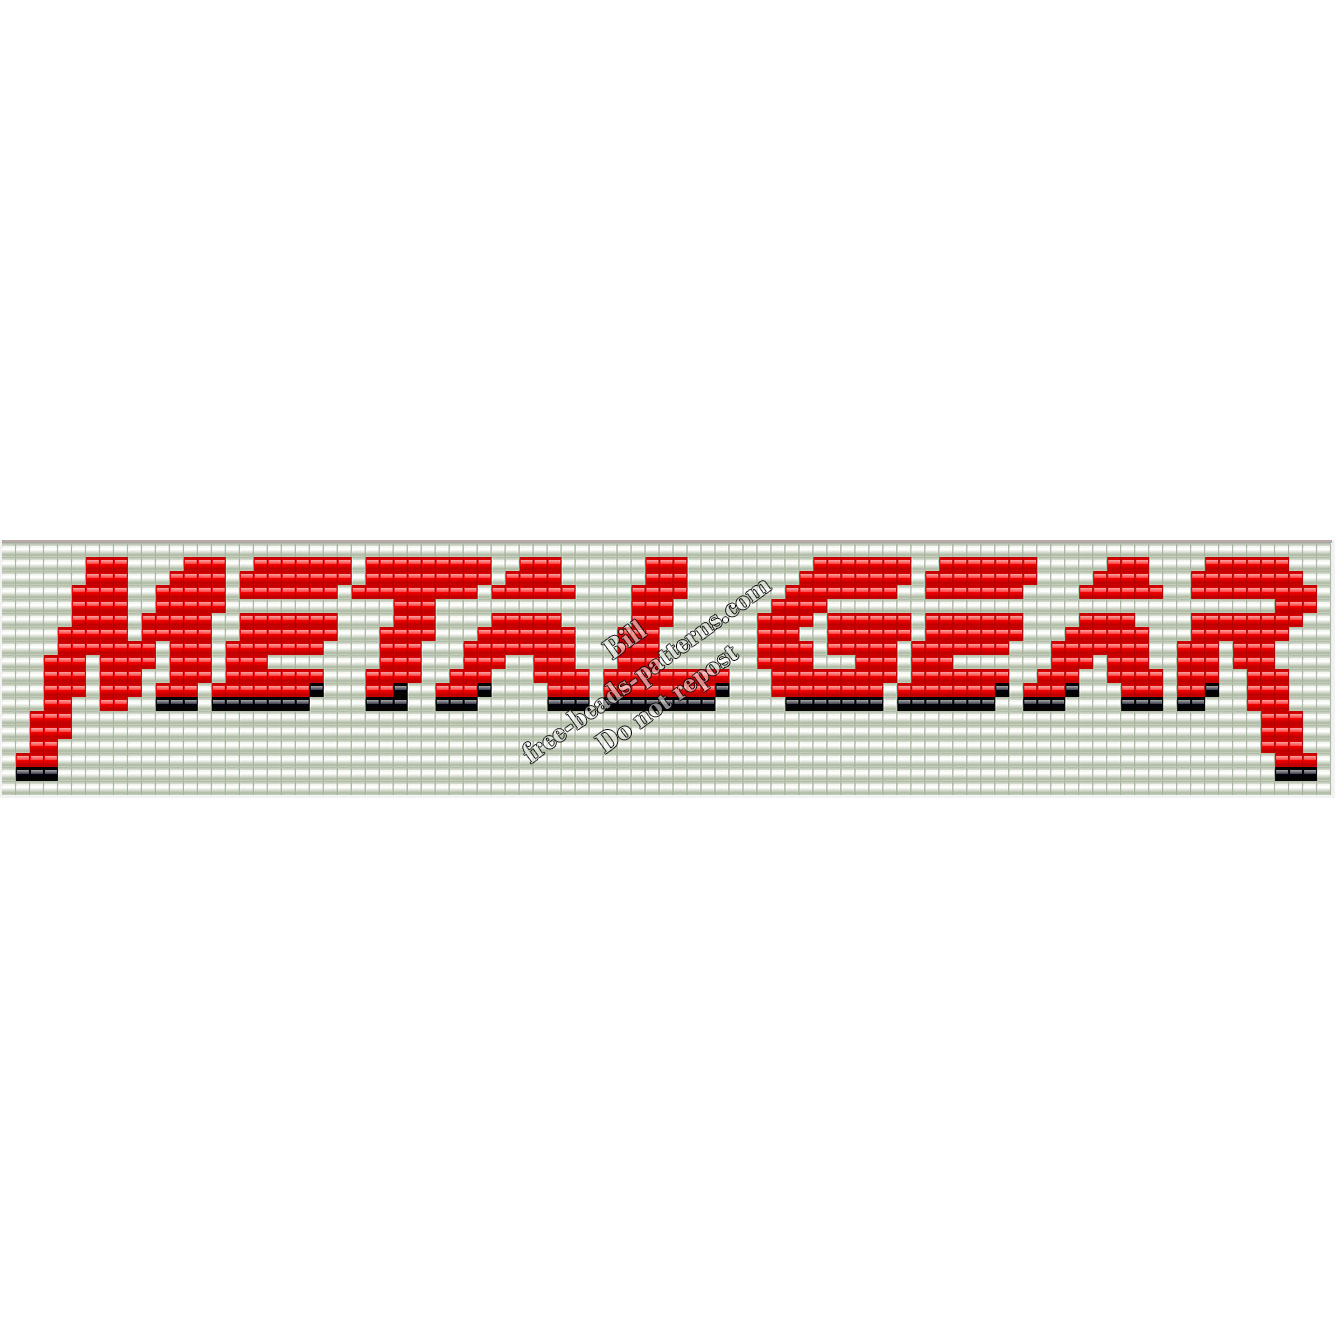 Metal Gear Solid 1 perler beads hama beads iron beads logo (4)